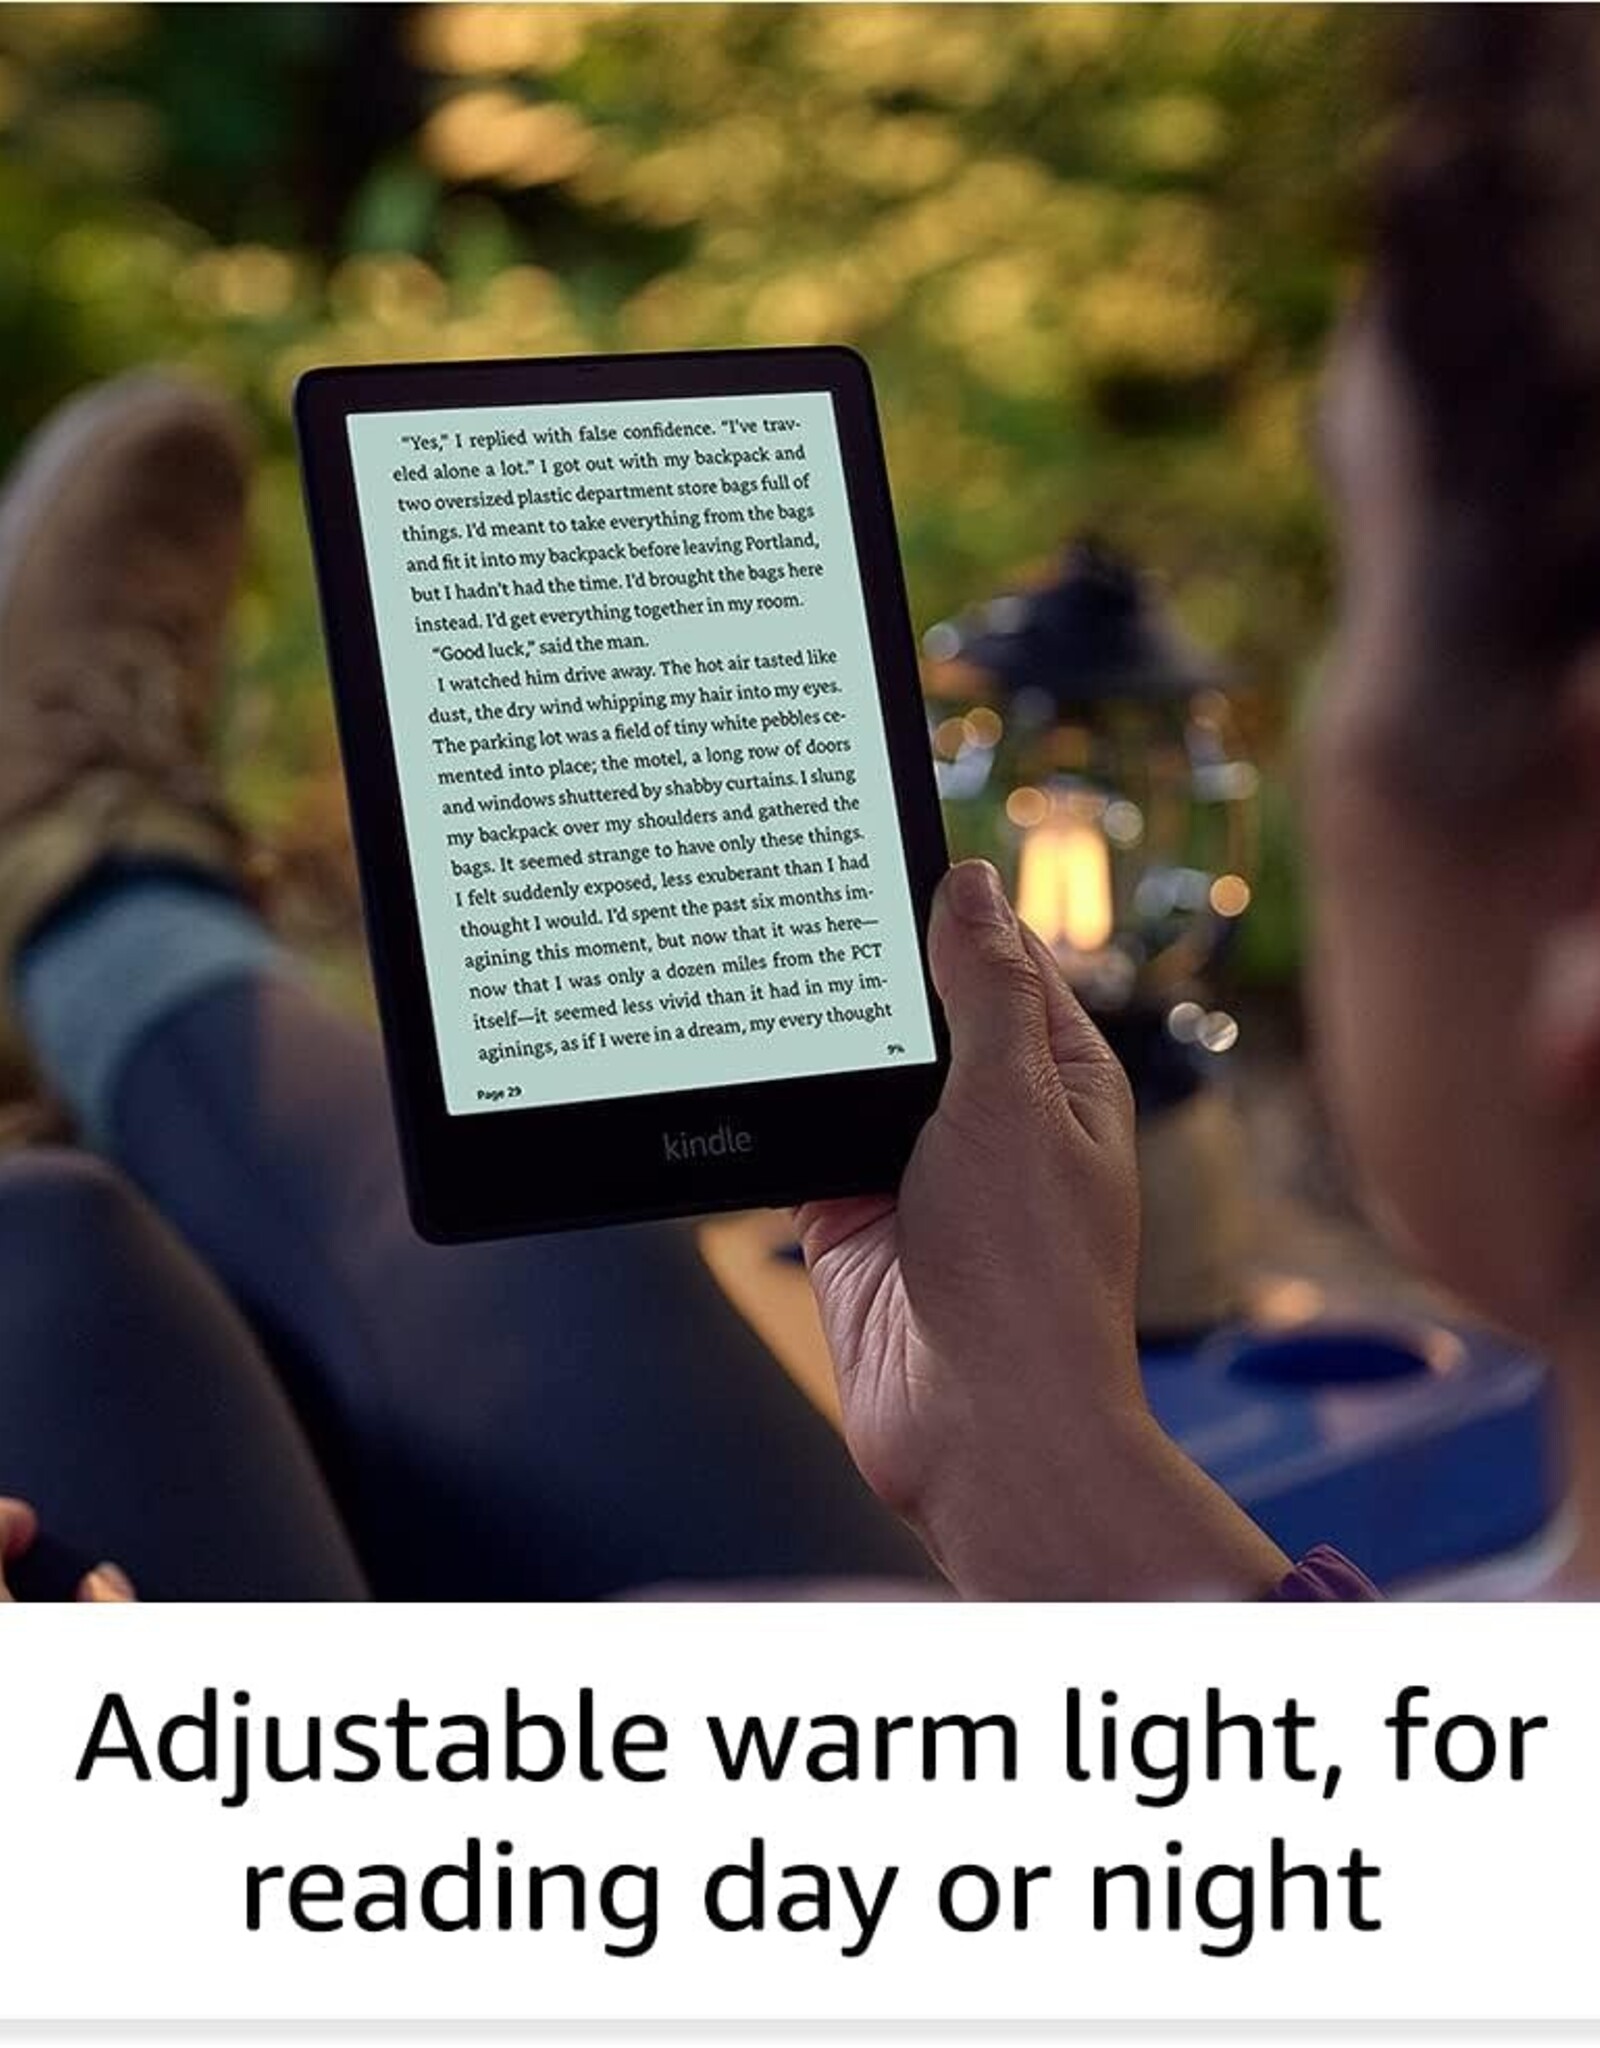 kindle Amazon - Kindle Paperwhite Signature Edition - 32GB - 2023 - Agave Green